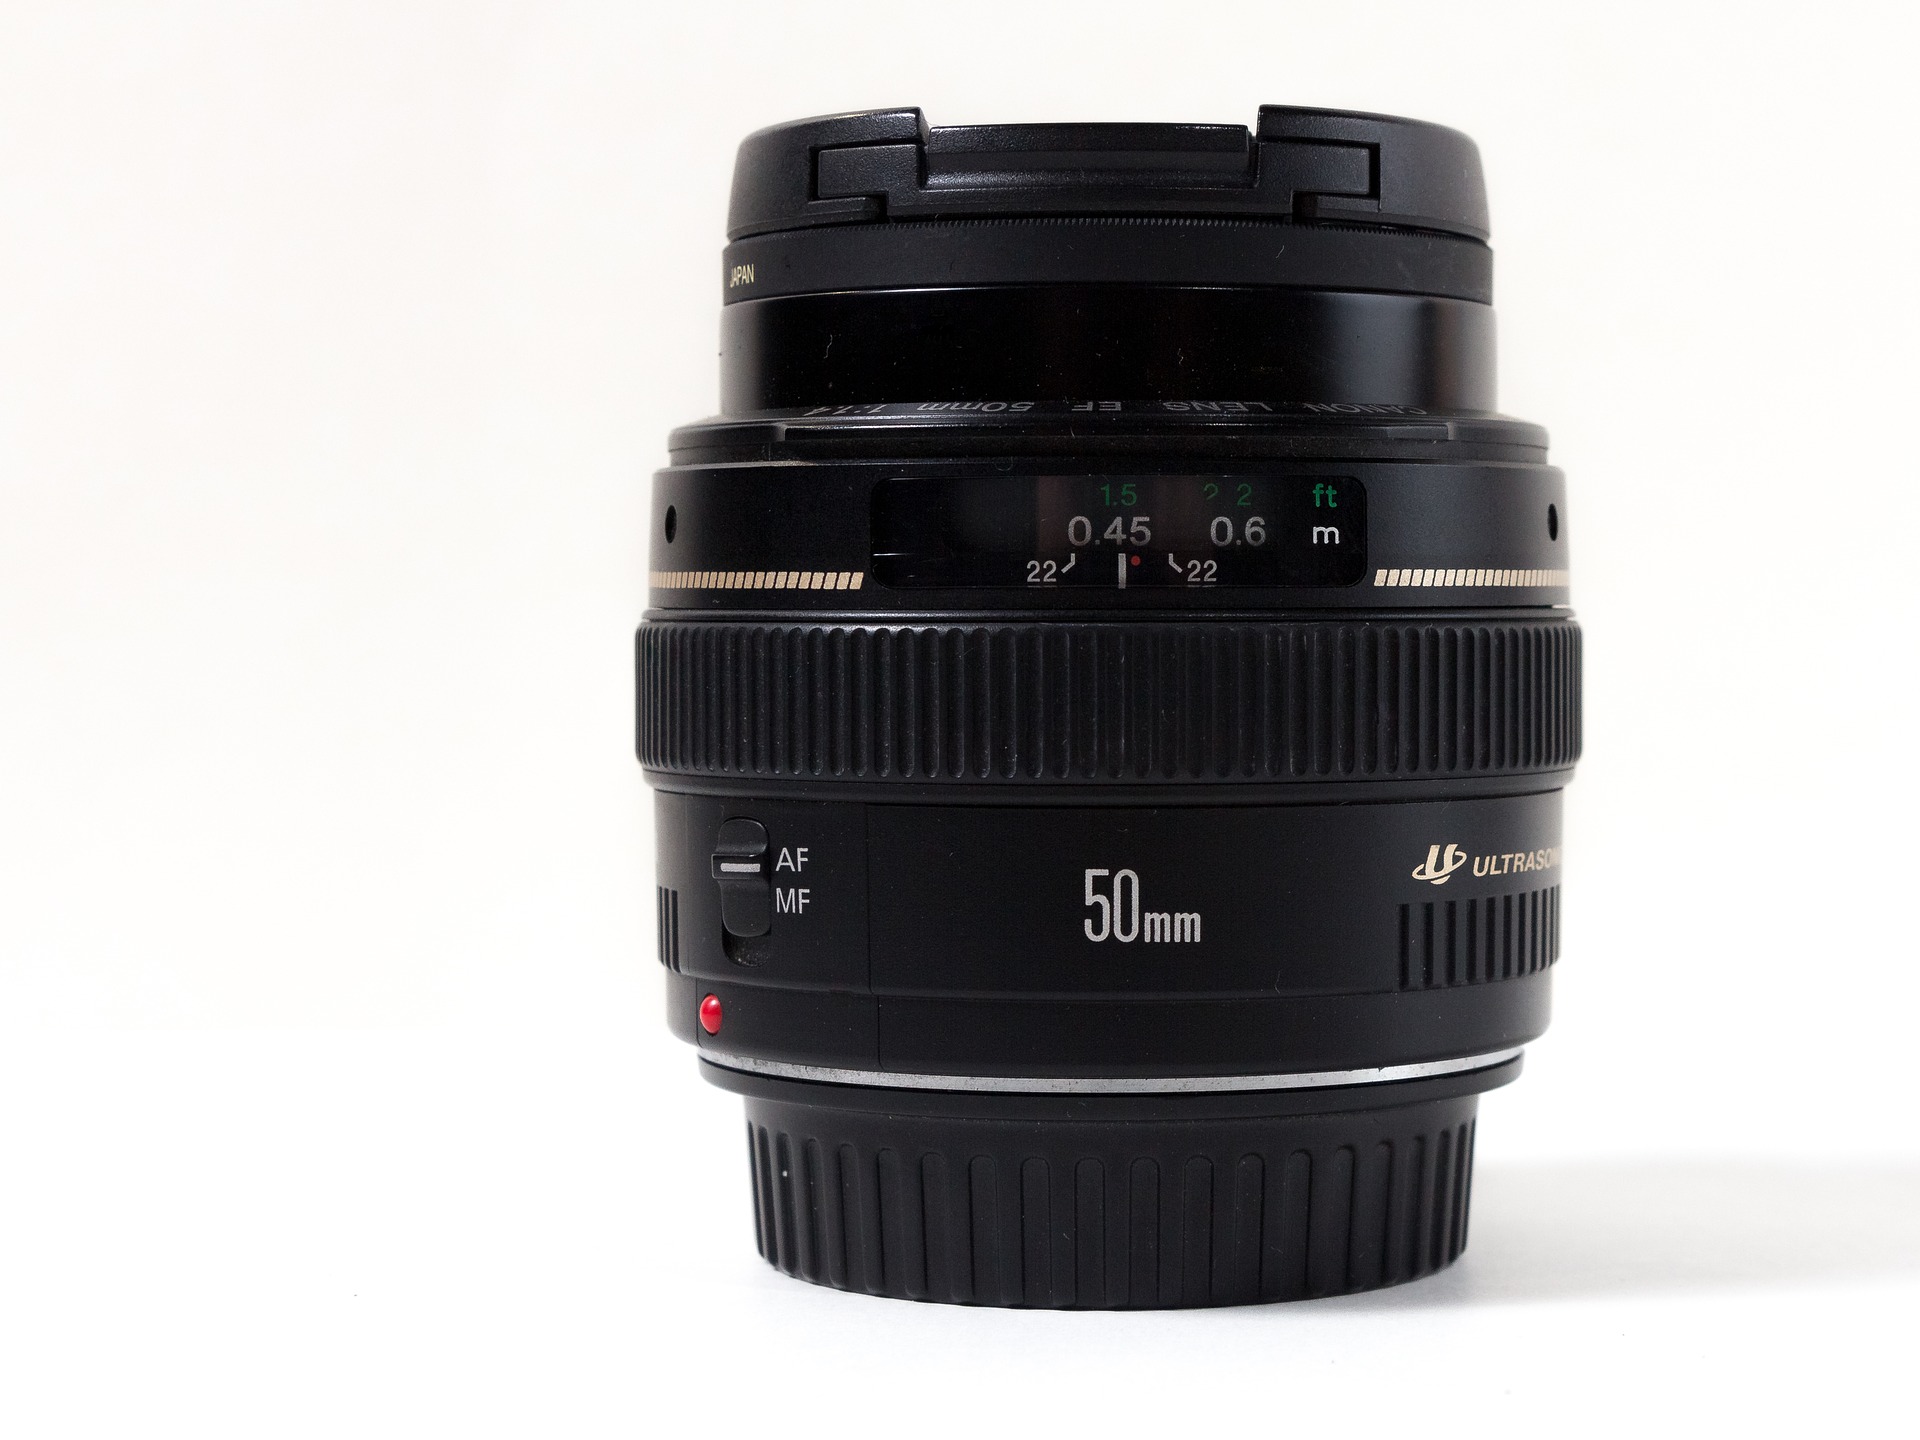 Lensa 50mm alternatif untuk pemula (Foto: Pixabay/strausadolf)